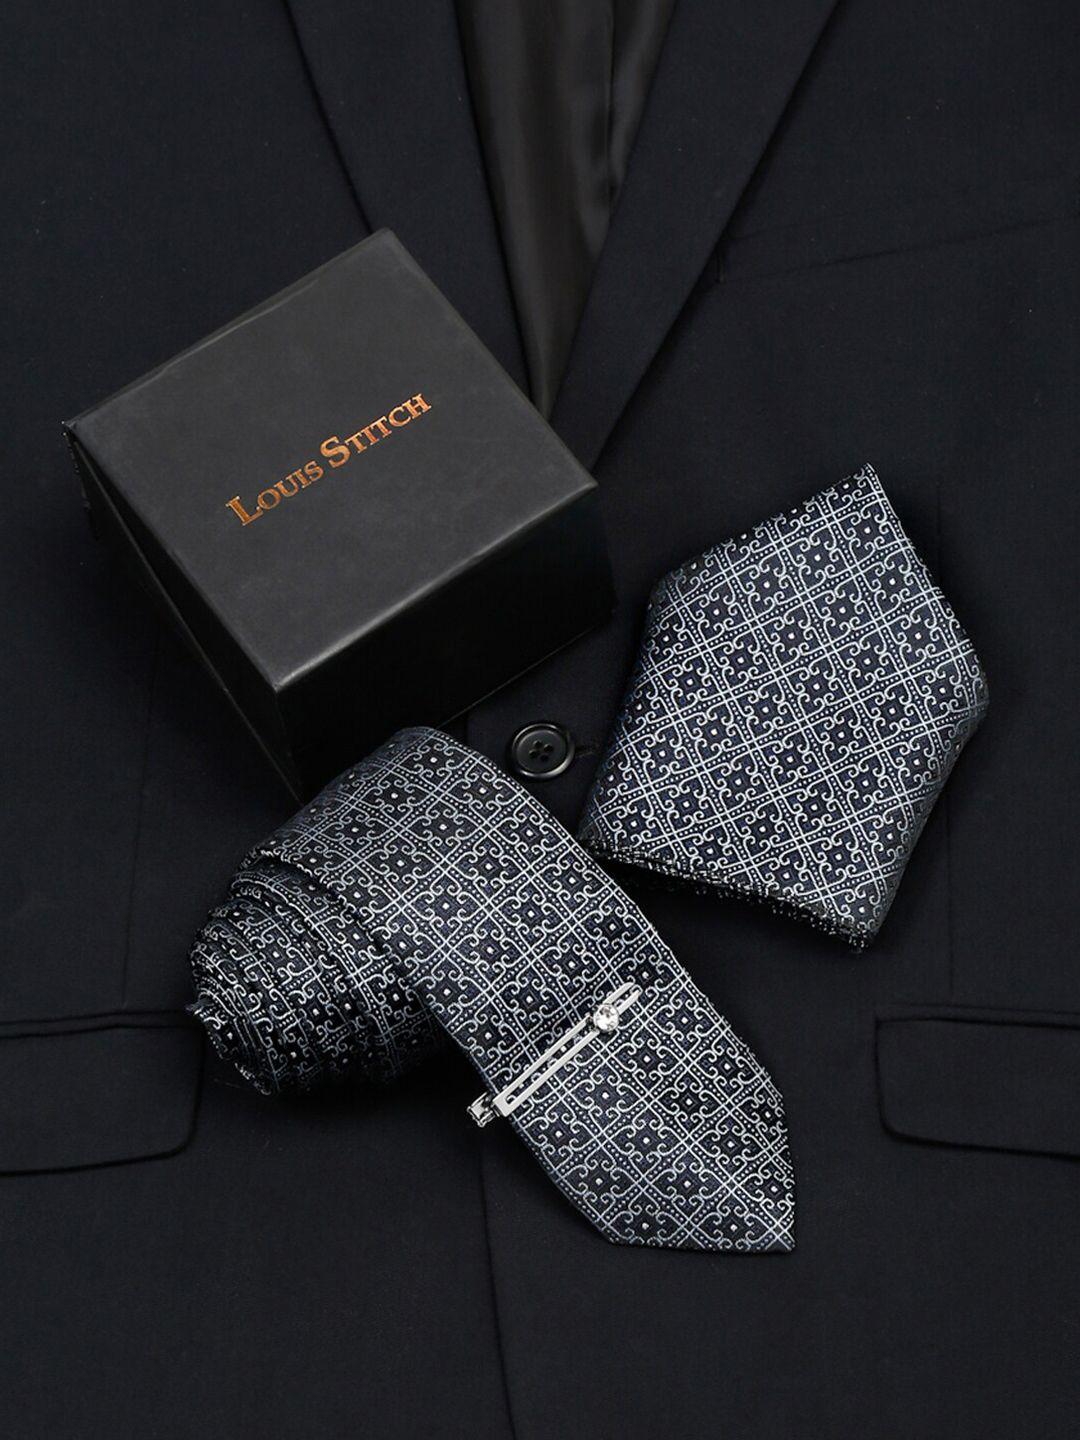 louis stitch men denim blue italian silk necktie pocket square & chrome tiepin